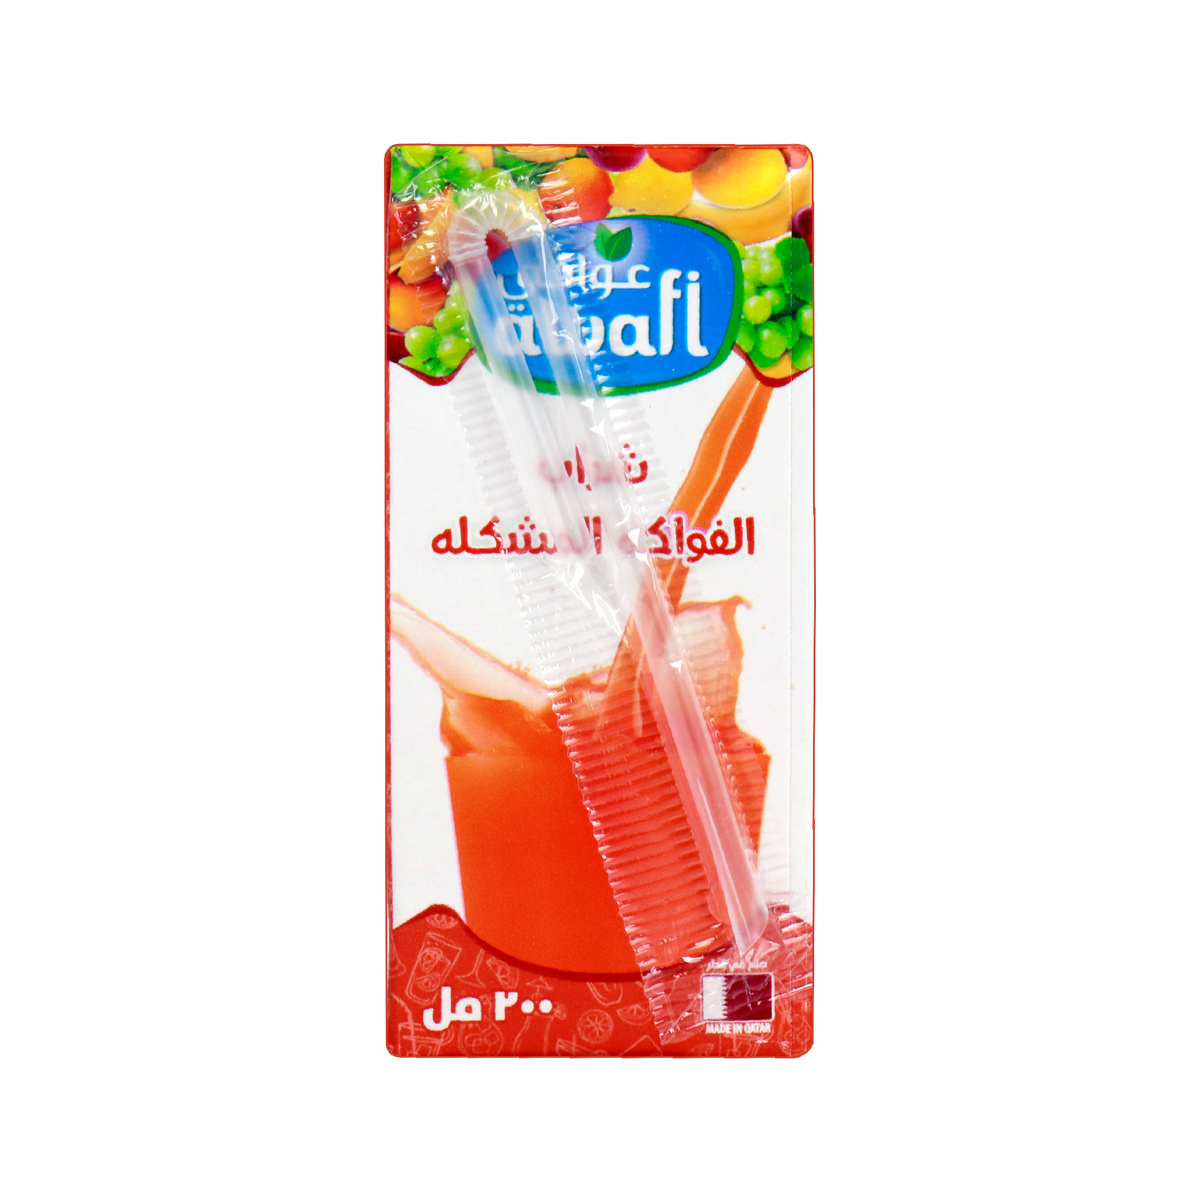 Awafi Mixed Fruit Drink 200ml